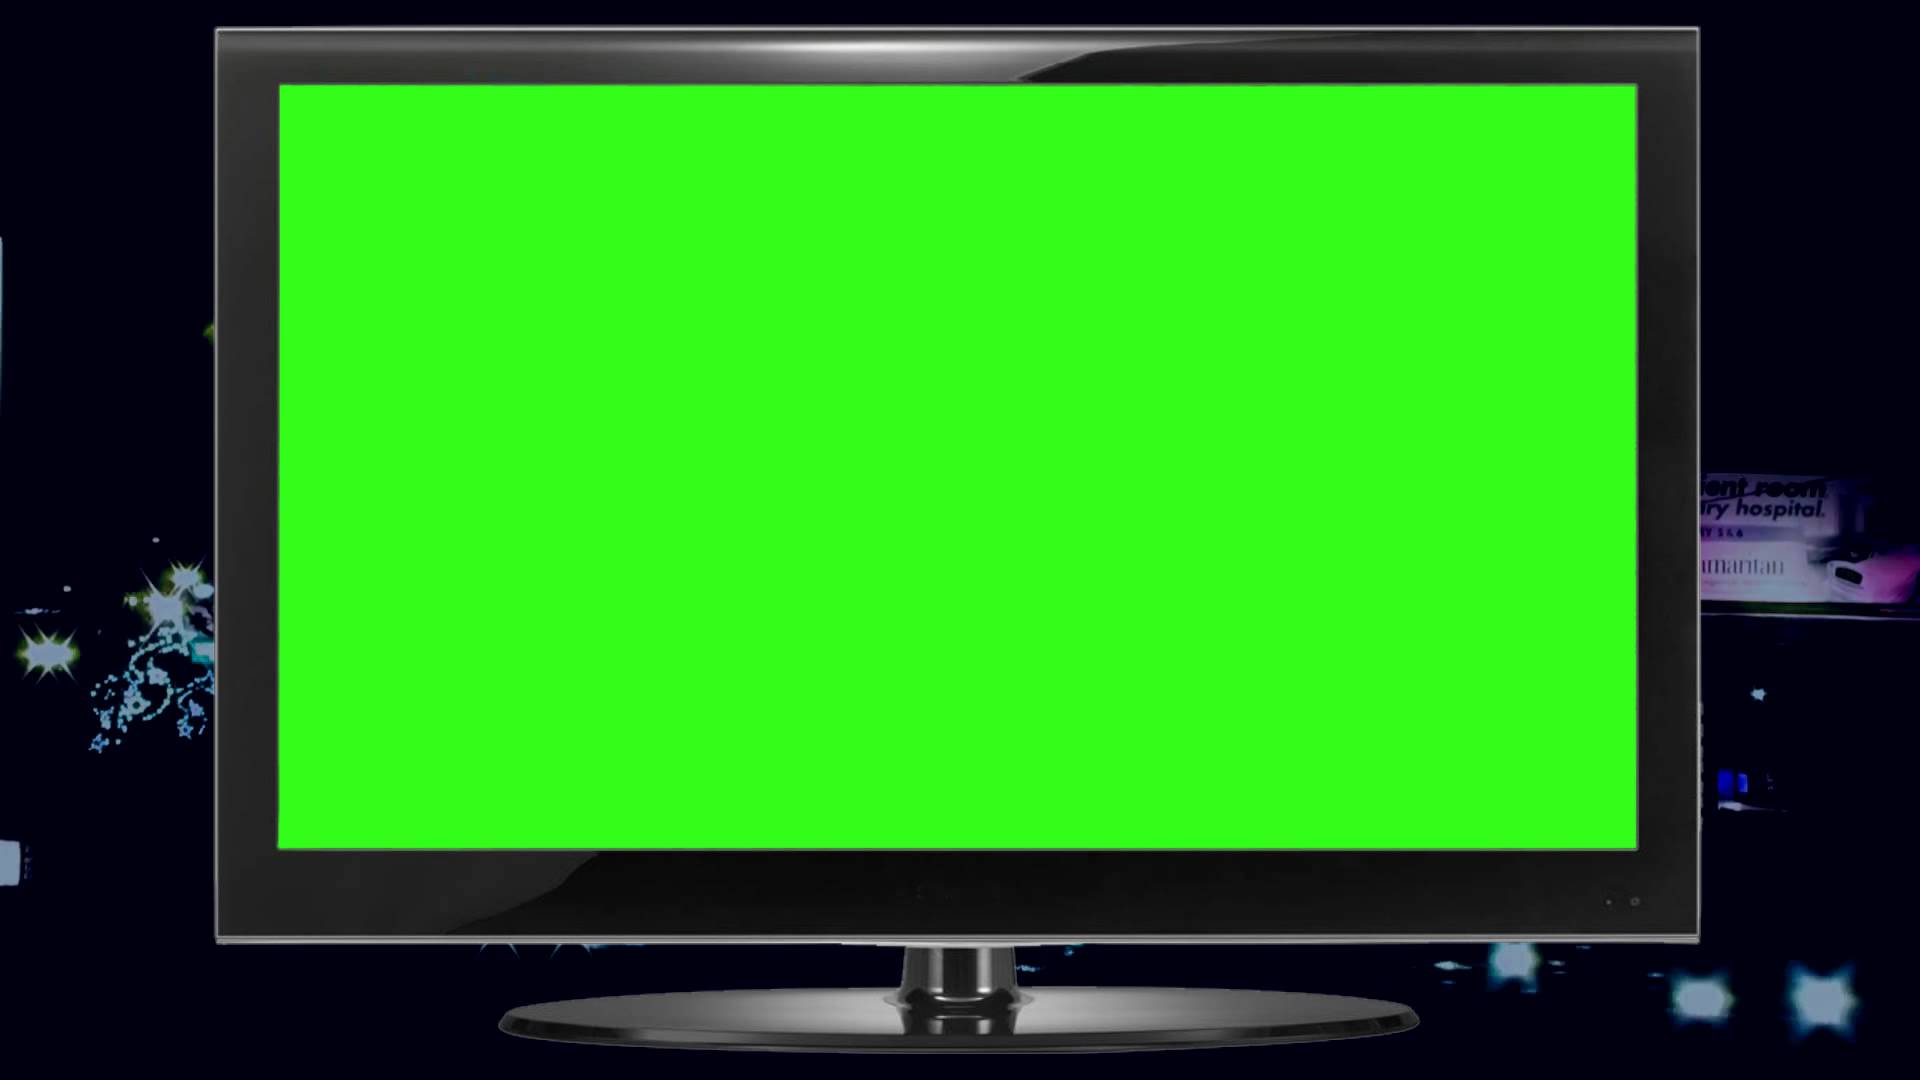 Green Screen TV - Free background video 1080p HD stock video ...